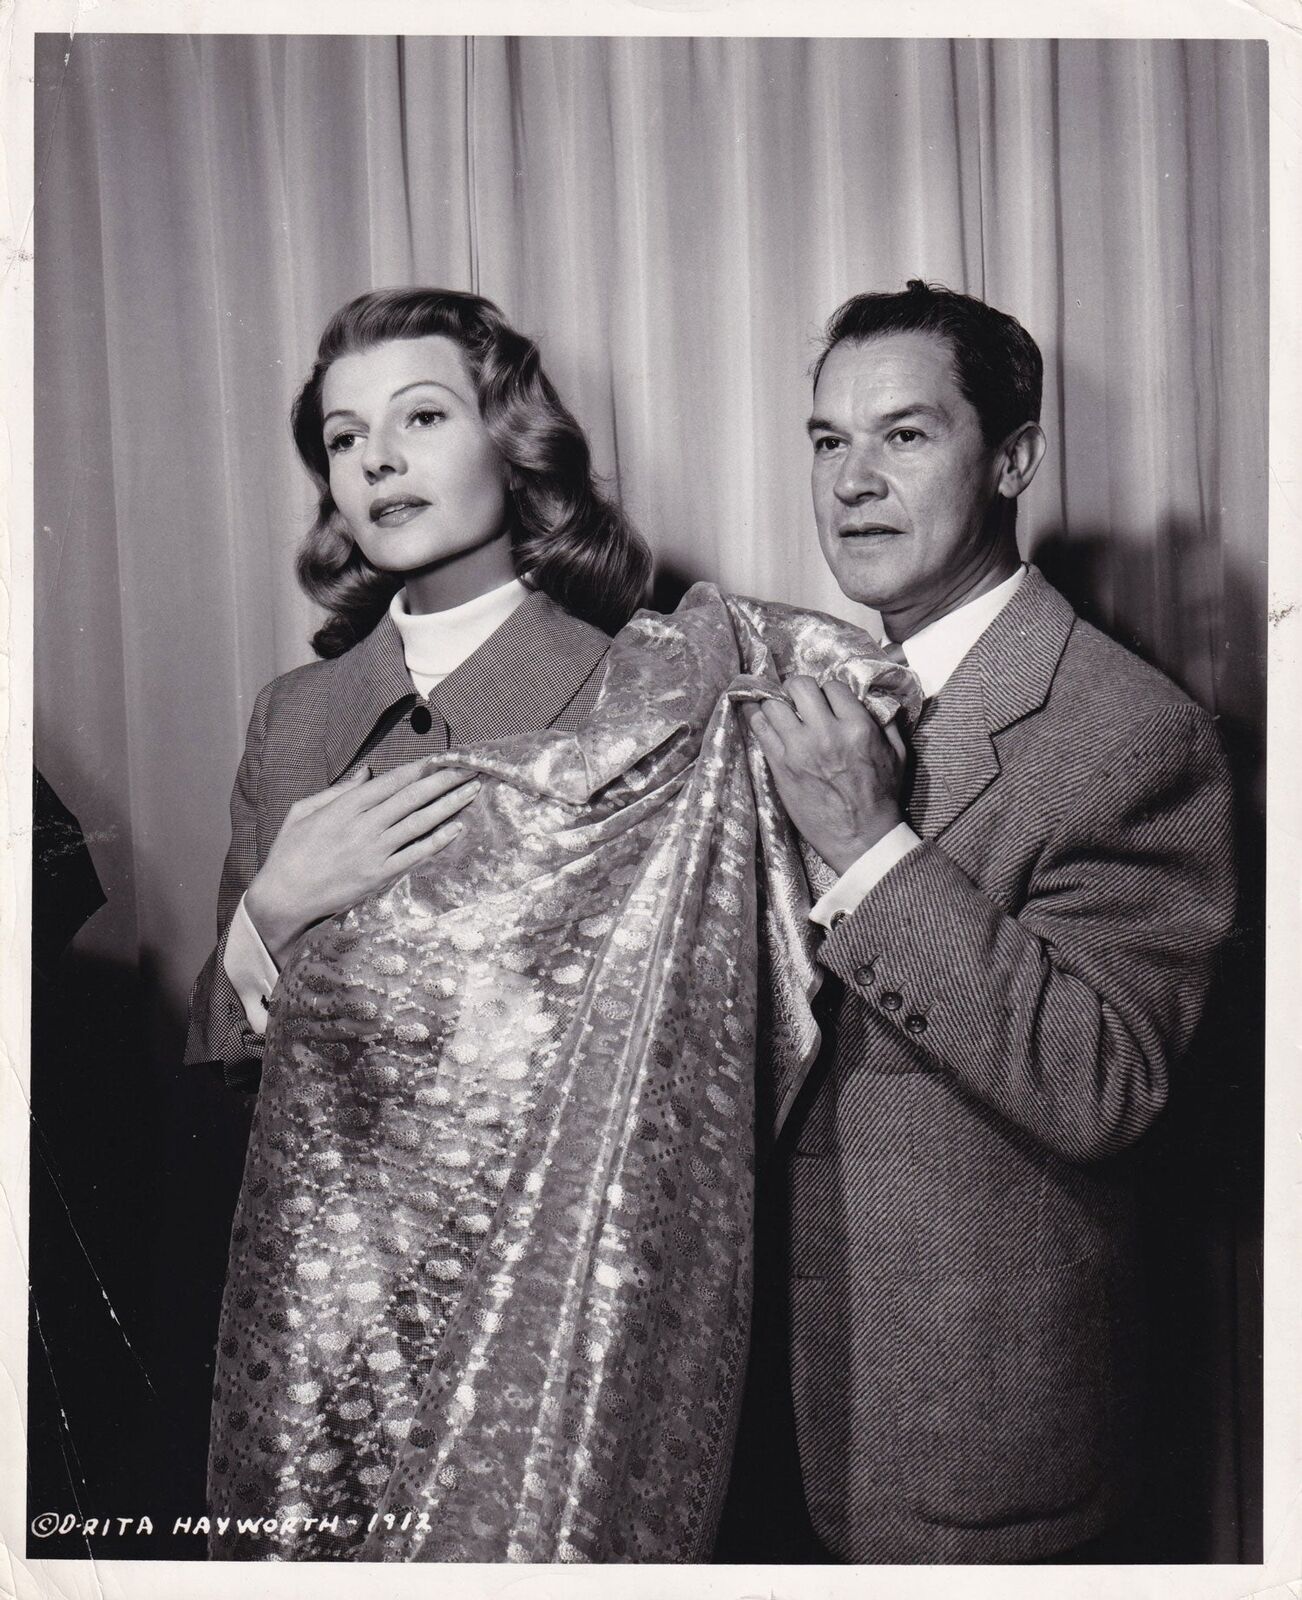 ORIGINAL PHOTOGRAPH OF RITA HAYWORTH AND JEAN LOUIS CIRCA 1954 #151275